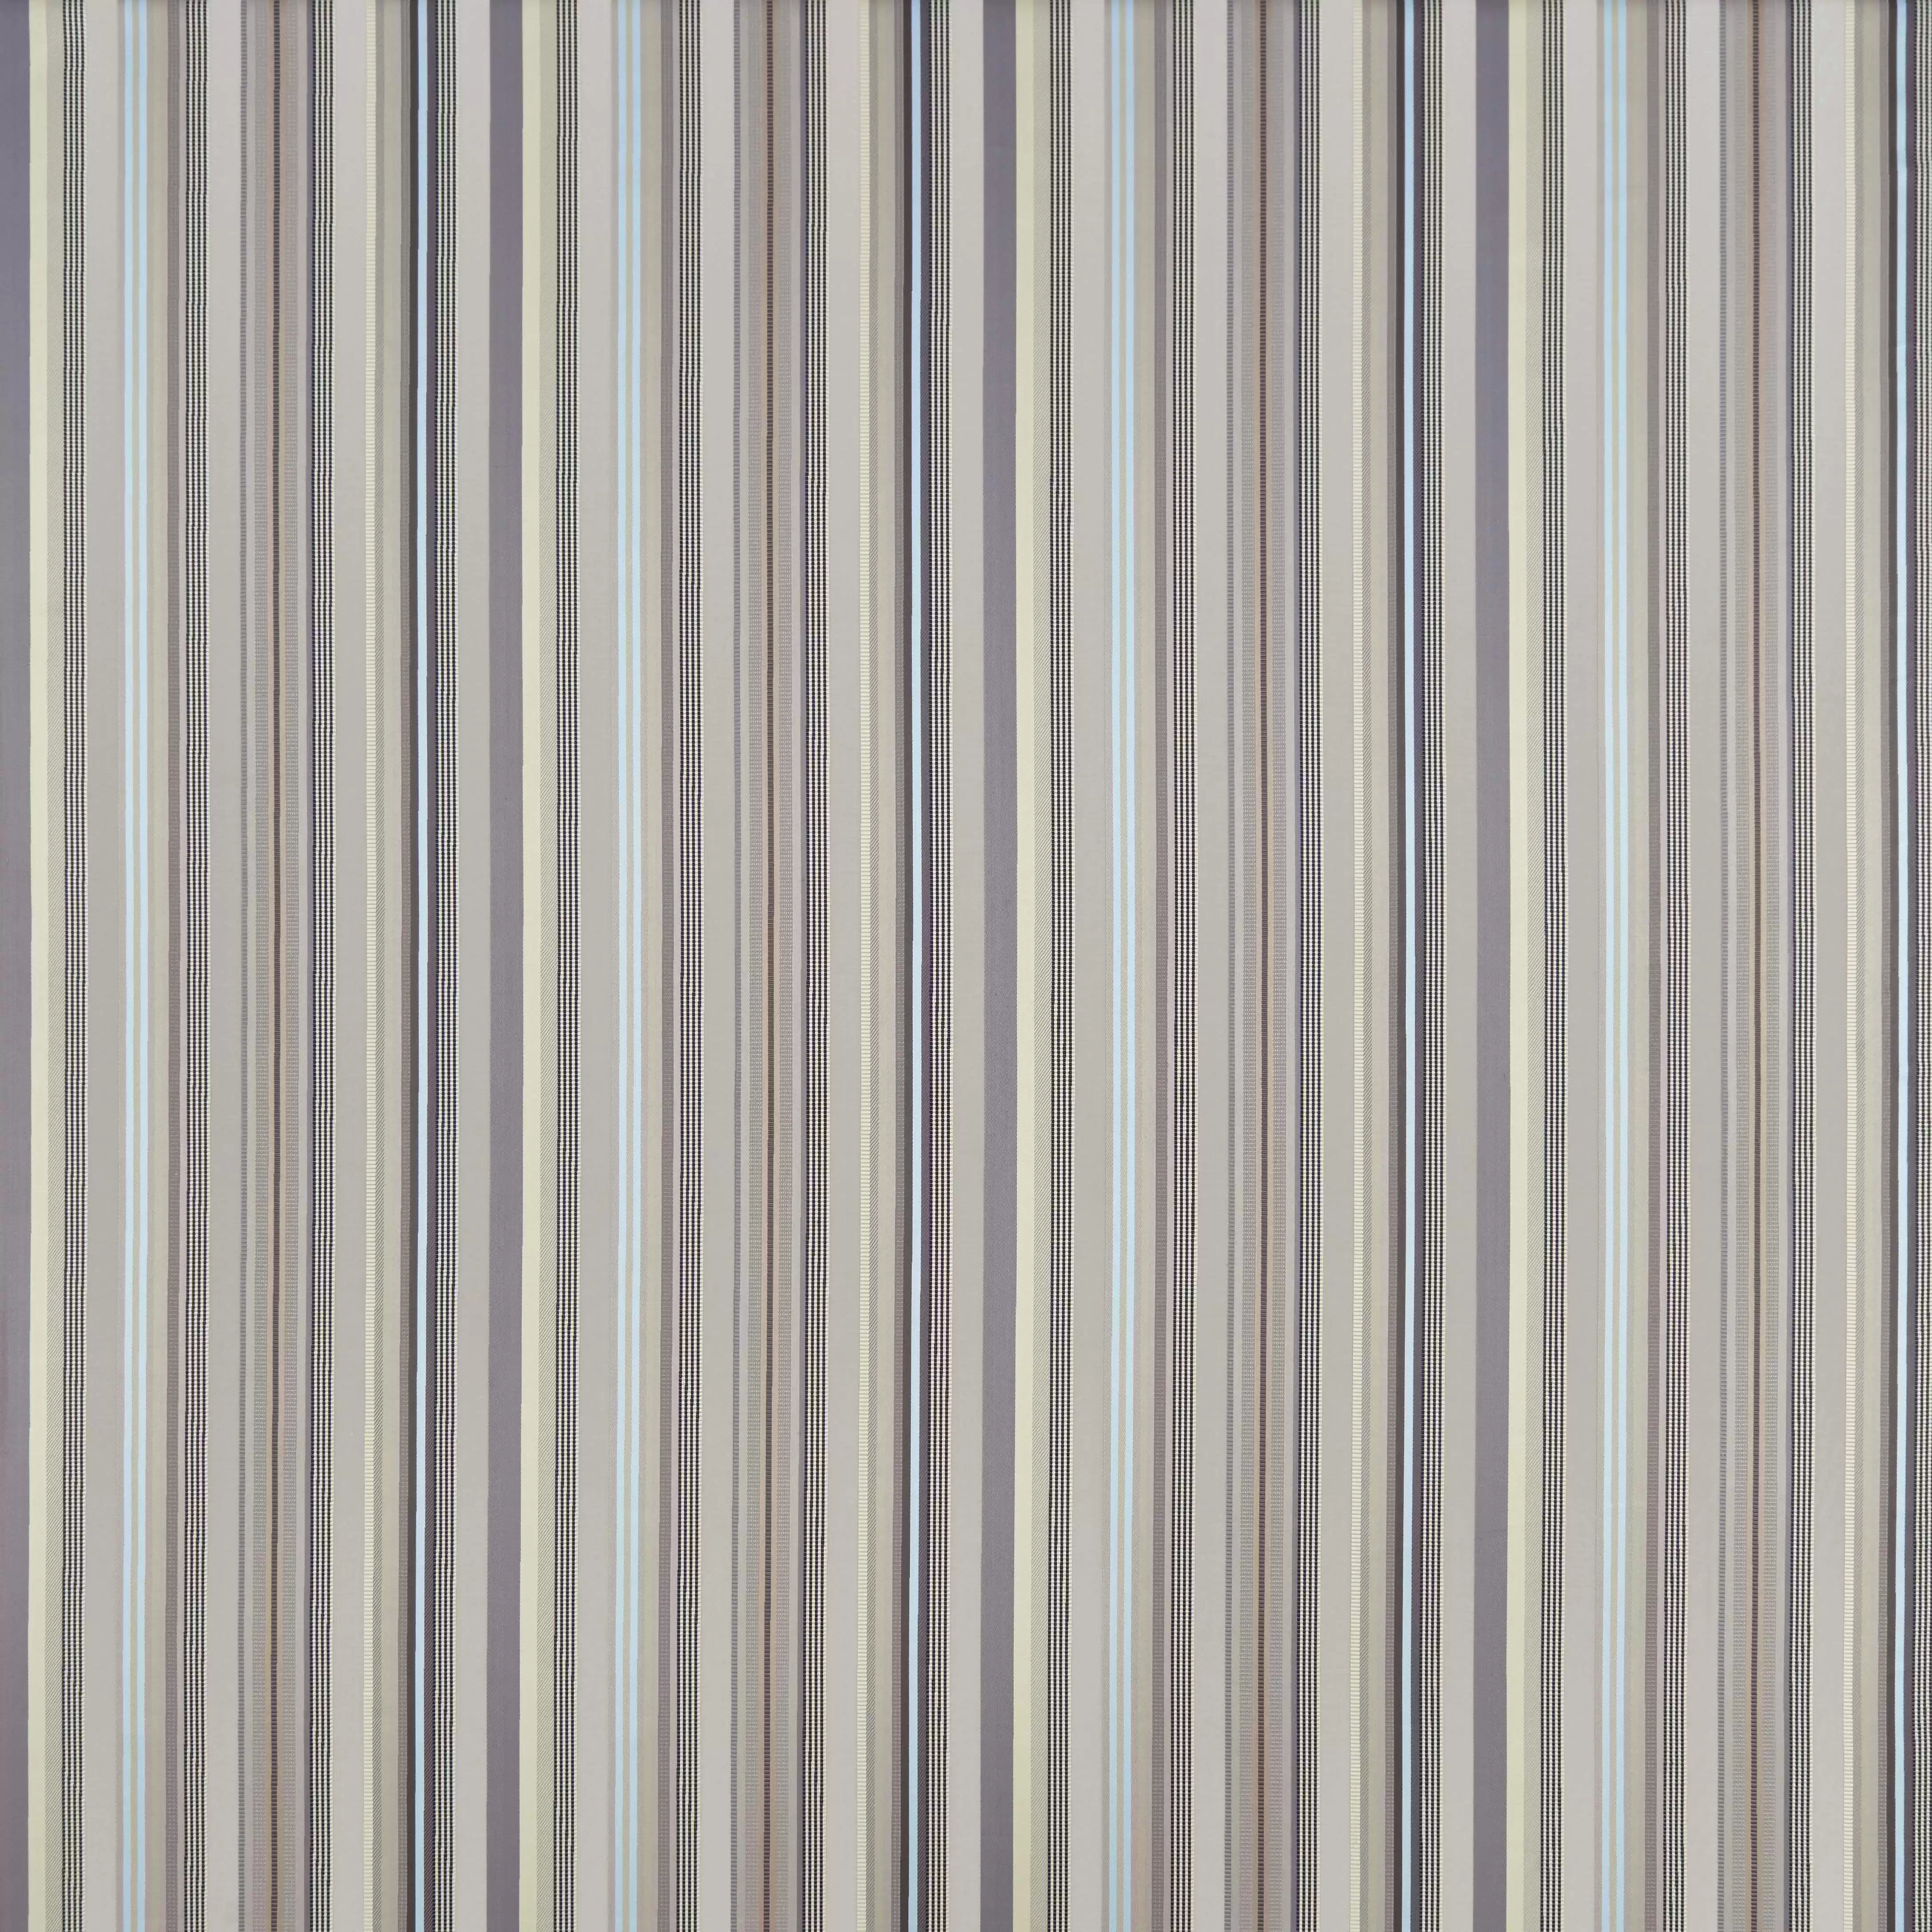 memphis-valli-stripe-silvergraphite